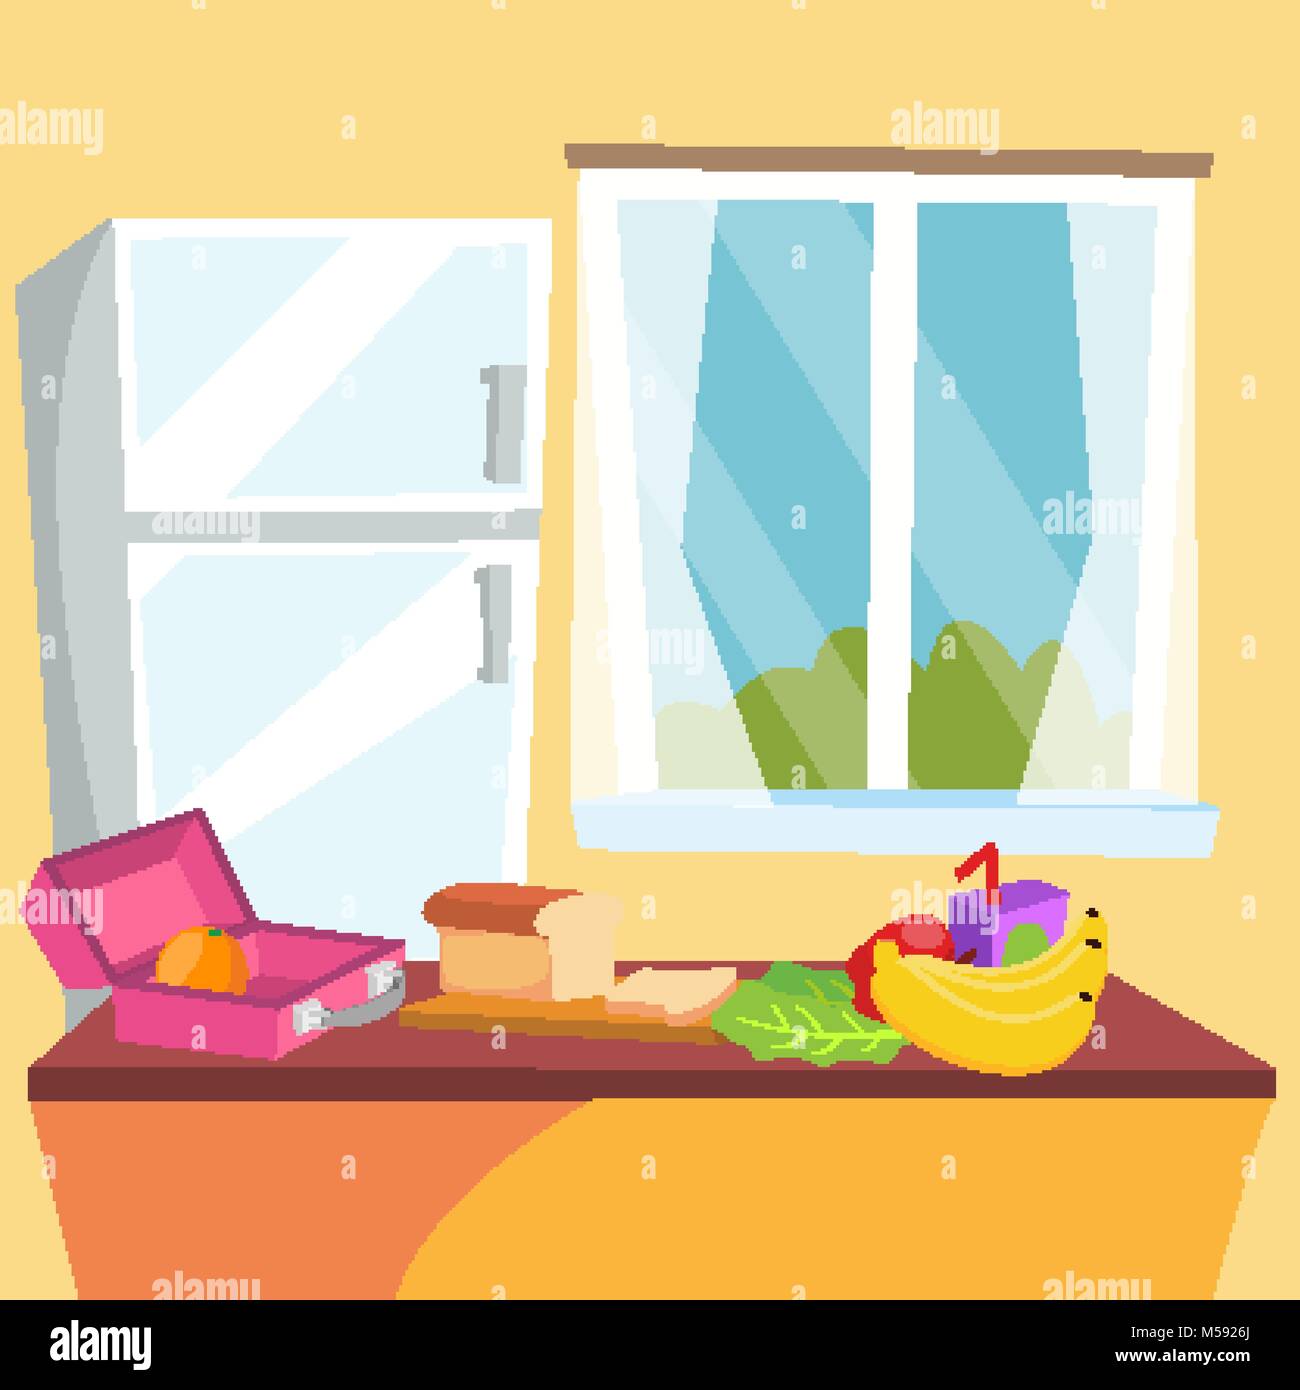 Kitchen Cartoon Vector. Classic Home Dining Room. Kitchen Interior Design. Dining Table, Fruits, Refrigerator. Flat Illustration Stock Vector